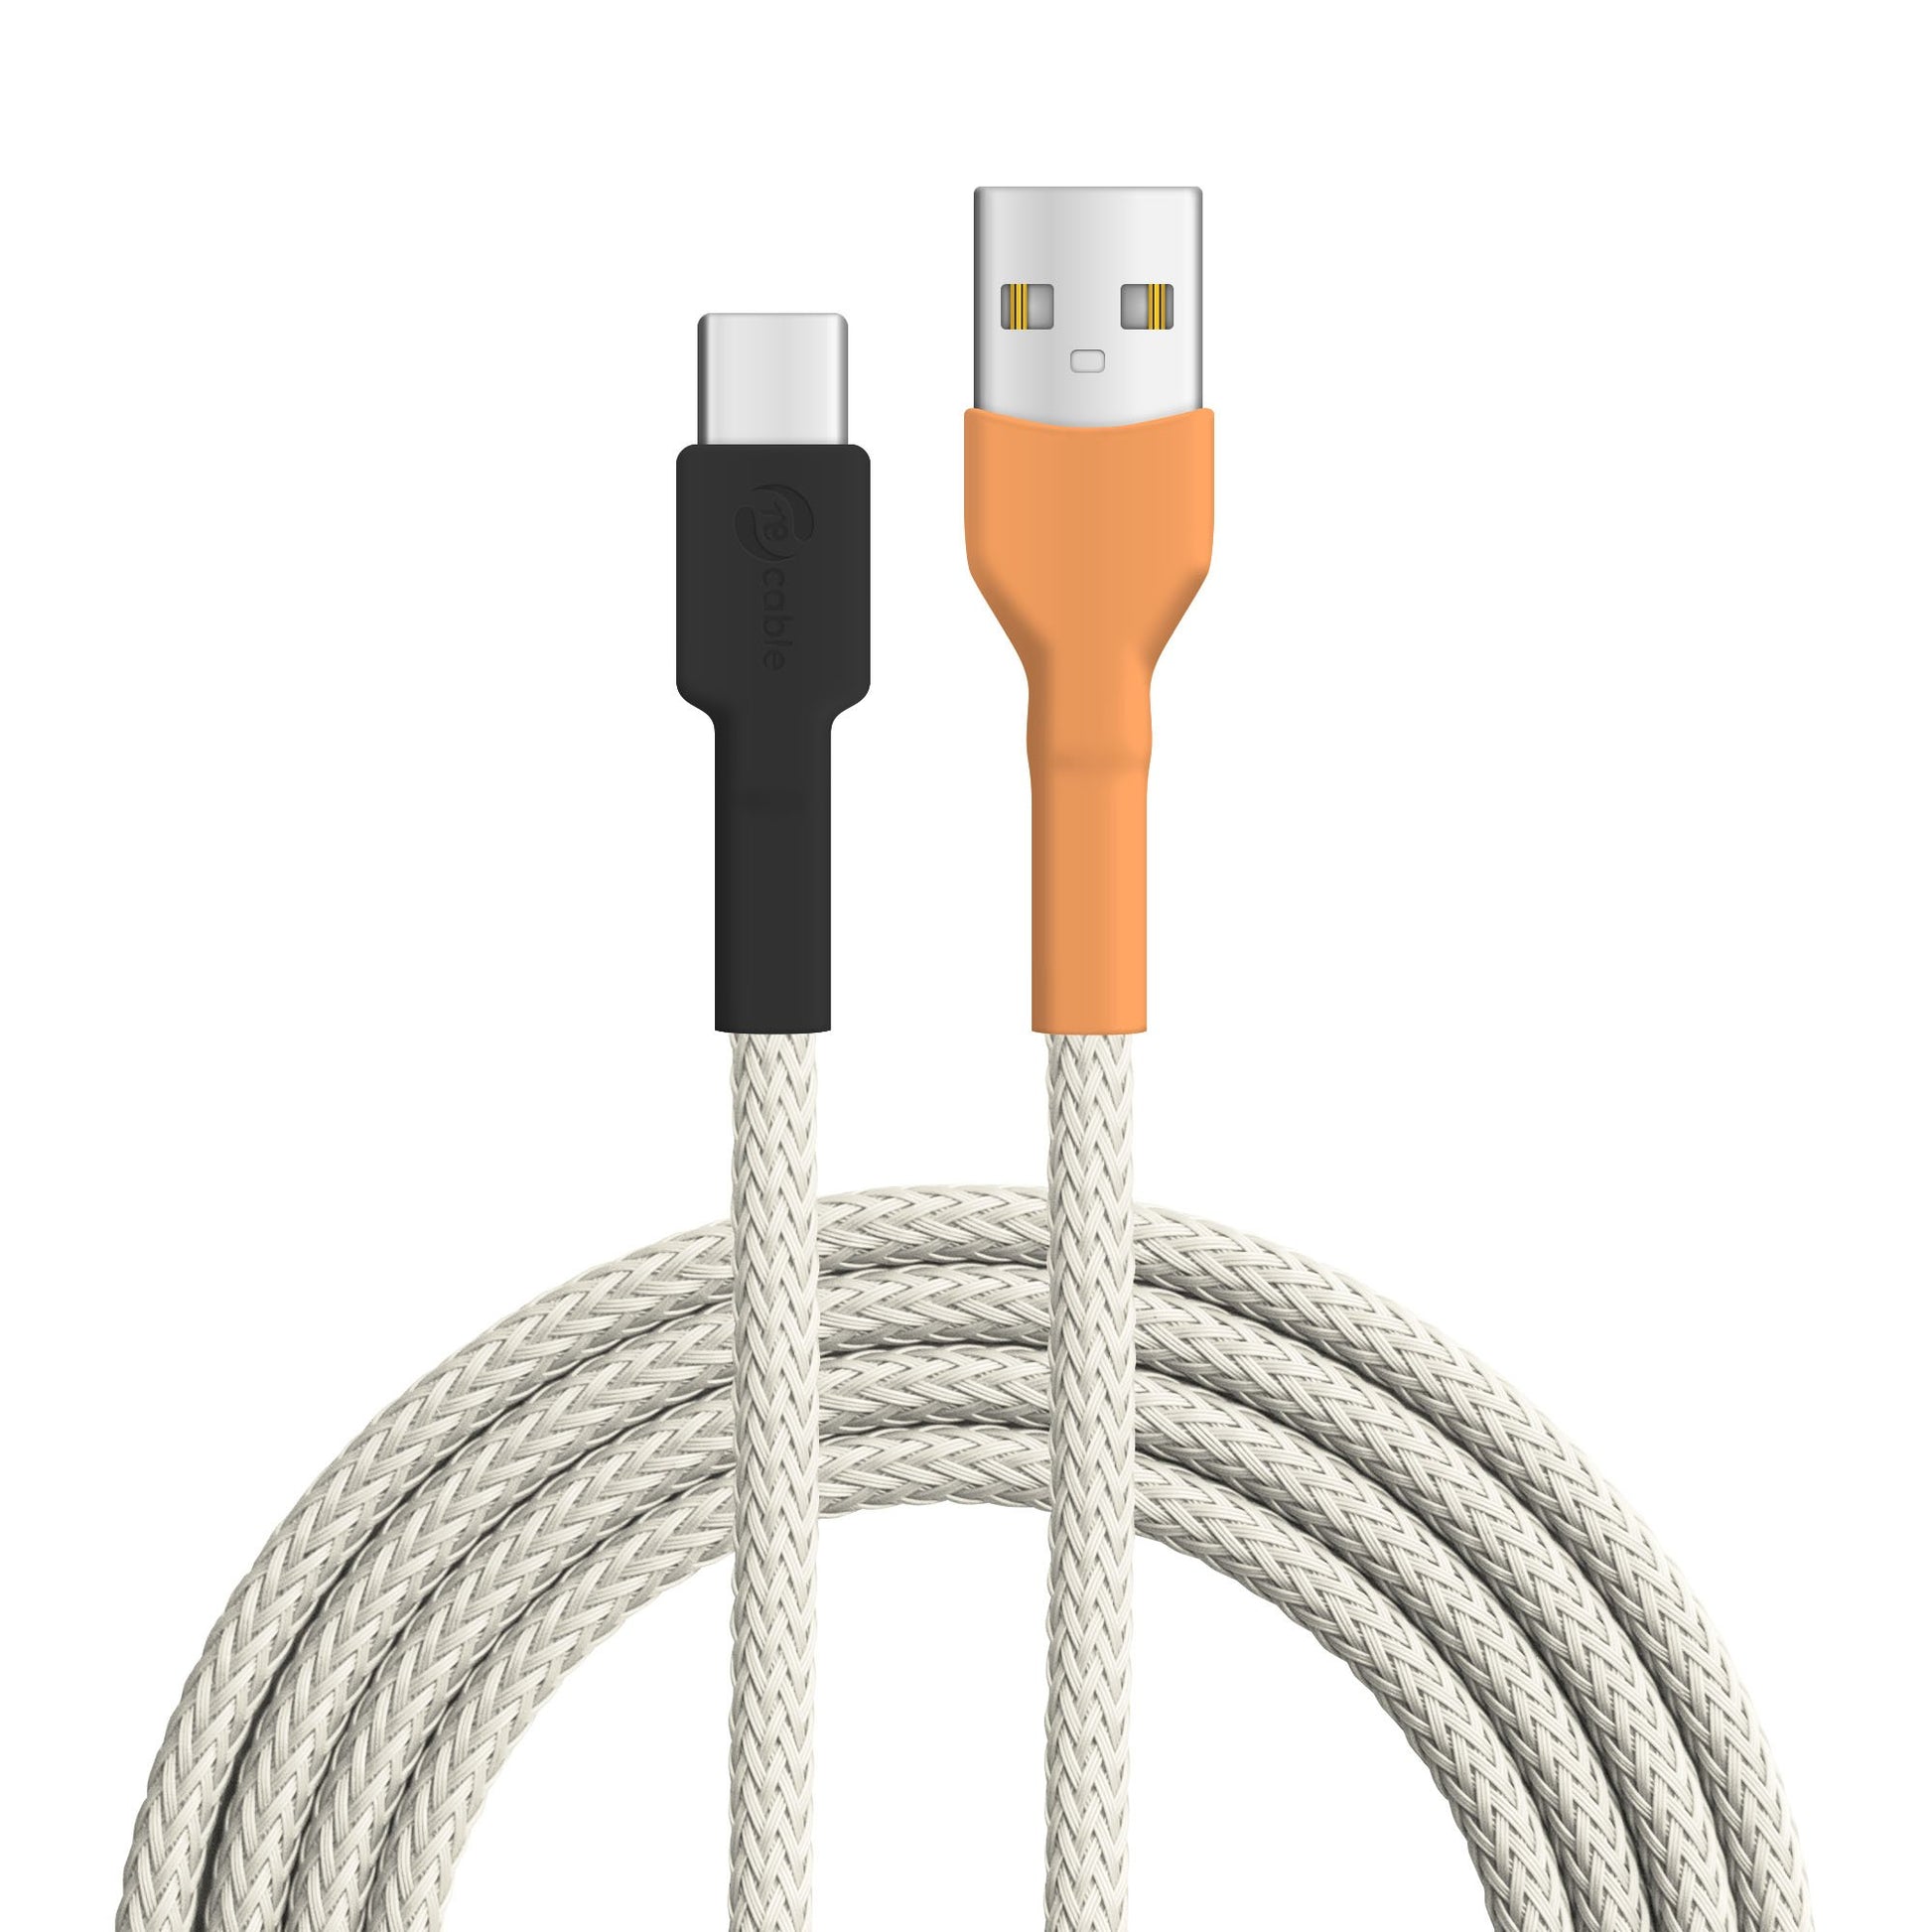 USB-Kabel, Design: Königs­pinguin, Anschlüsse: USB A auf USB C